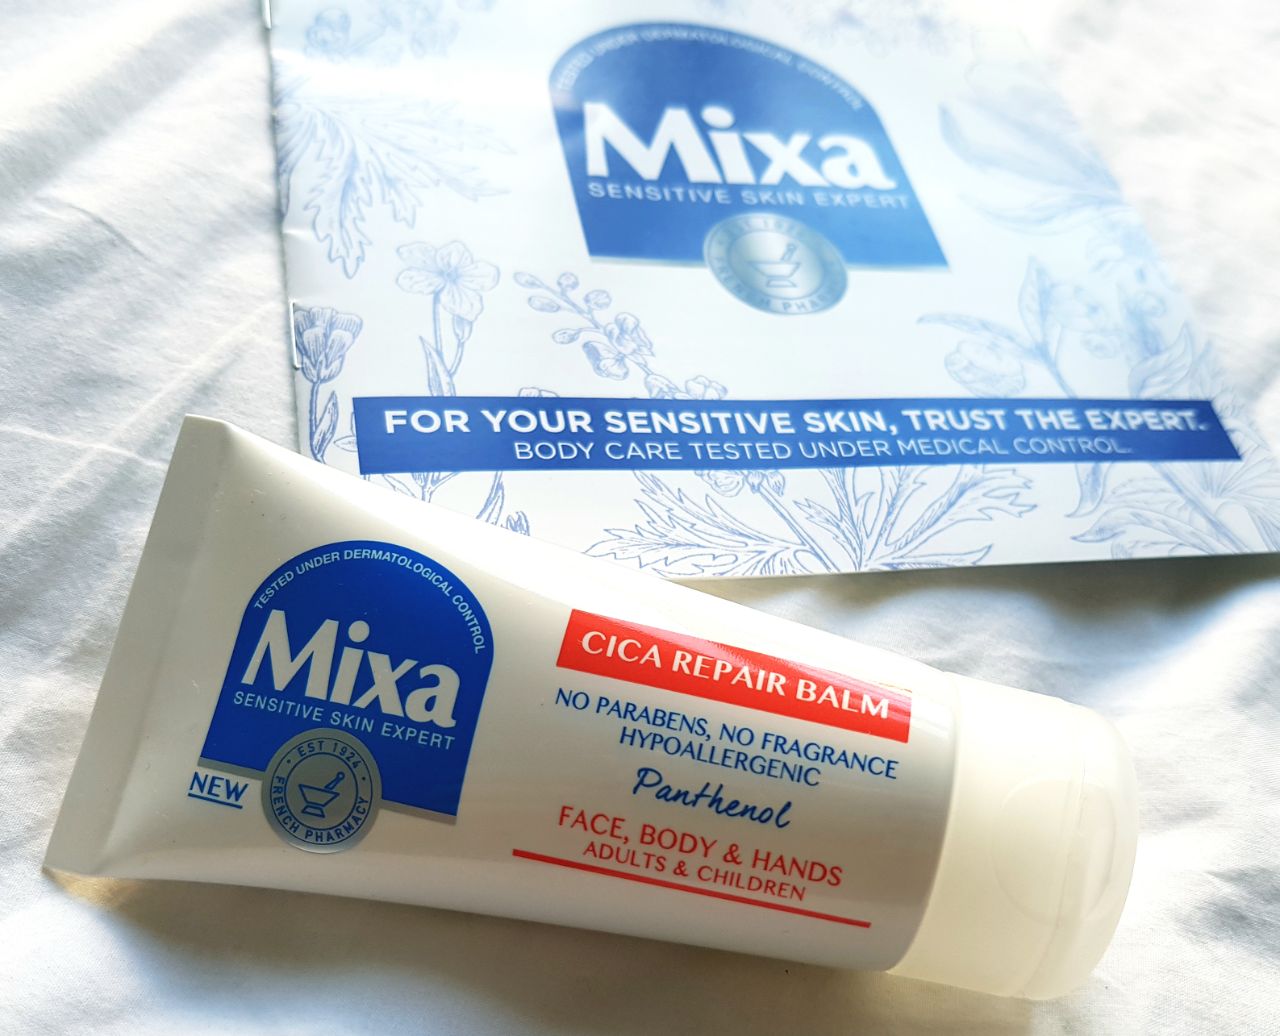 Mixa The Sensitive Skin Expert is here!